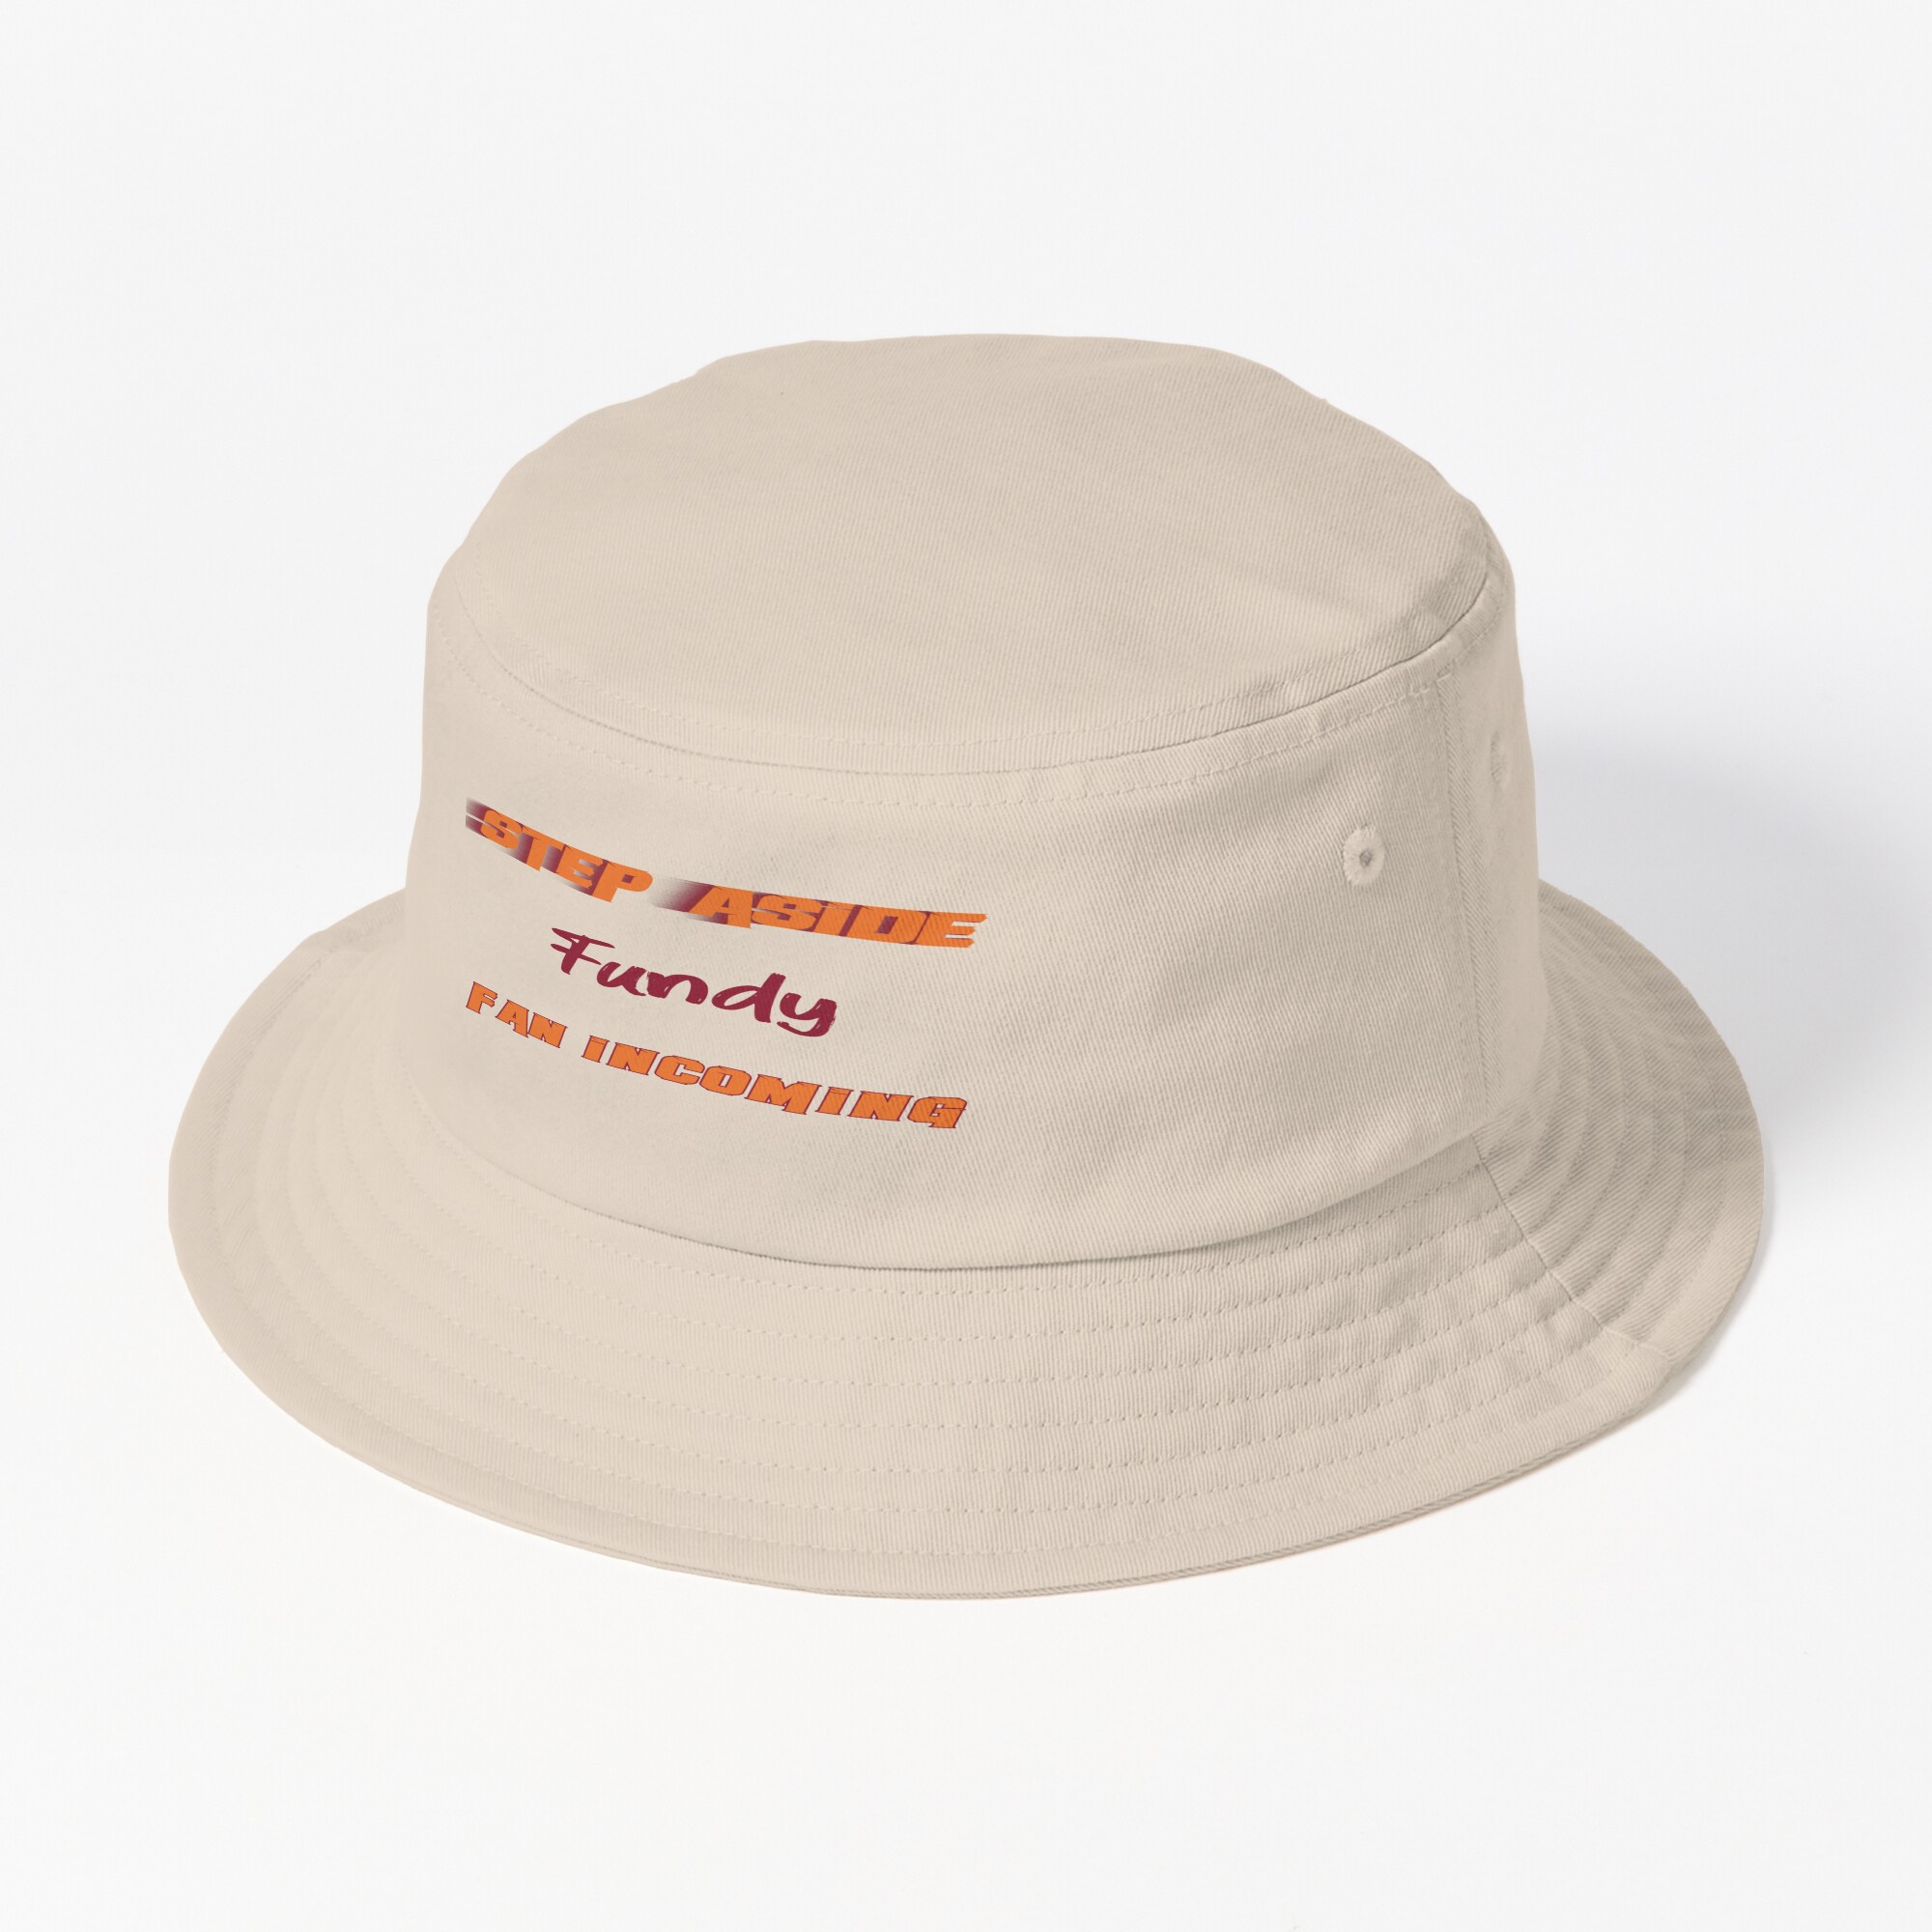 ssrcobucket hatproducte5d6c5f62bbf65eeprimarysquare2000x2000 bgf8f8f8 3 - Fundy Shop